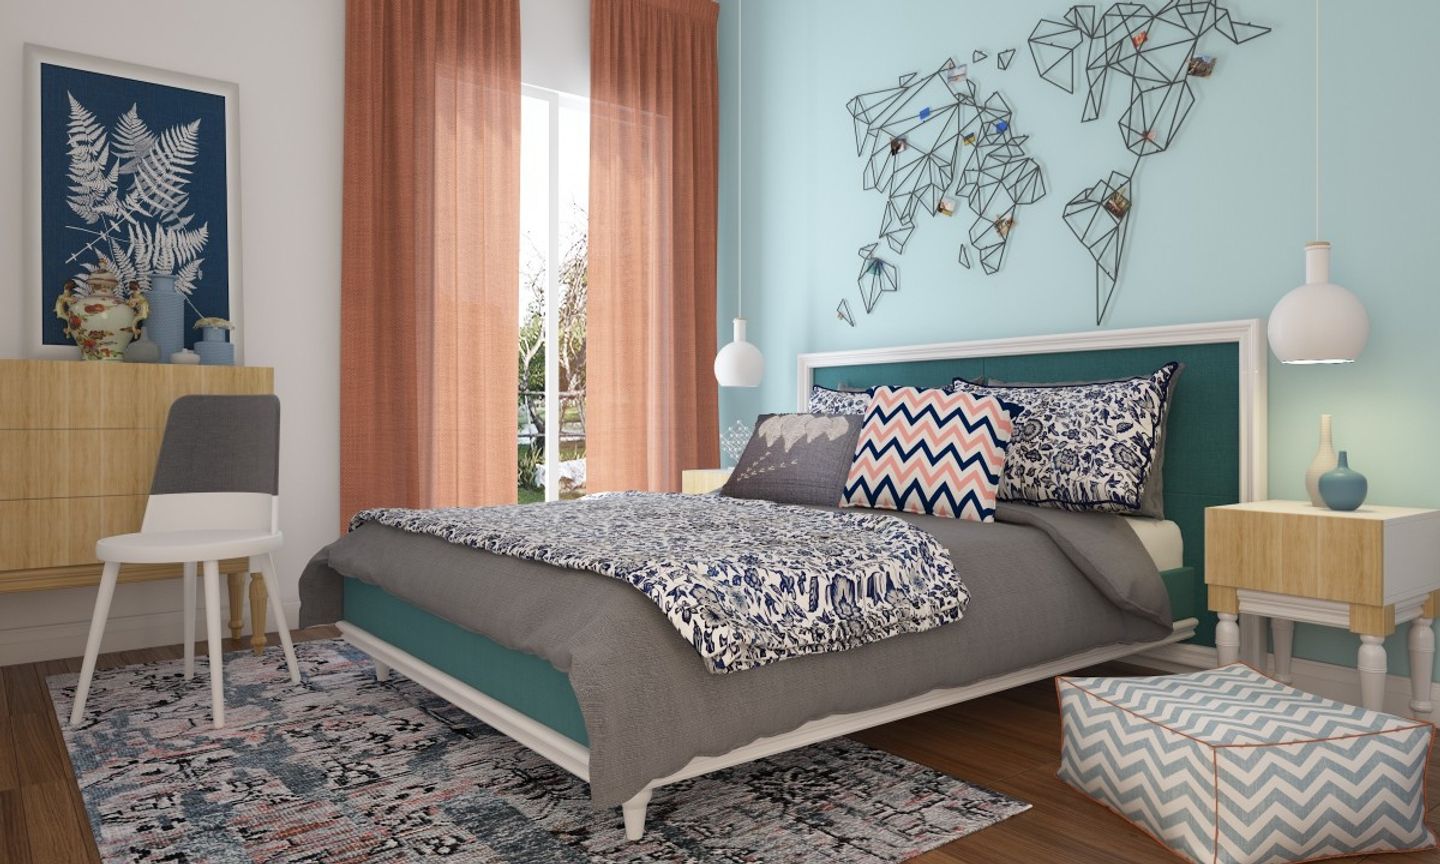 Eclectic Pastel Master Bedroom Design With Wallpaint